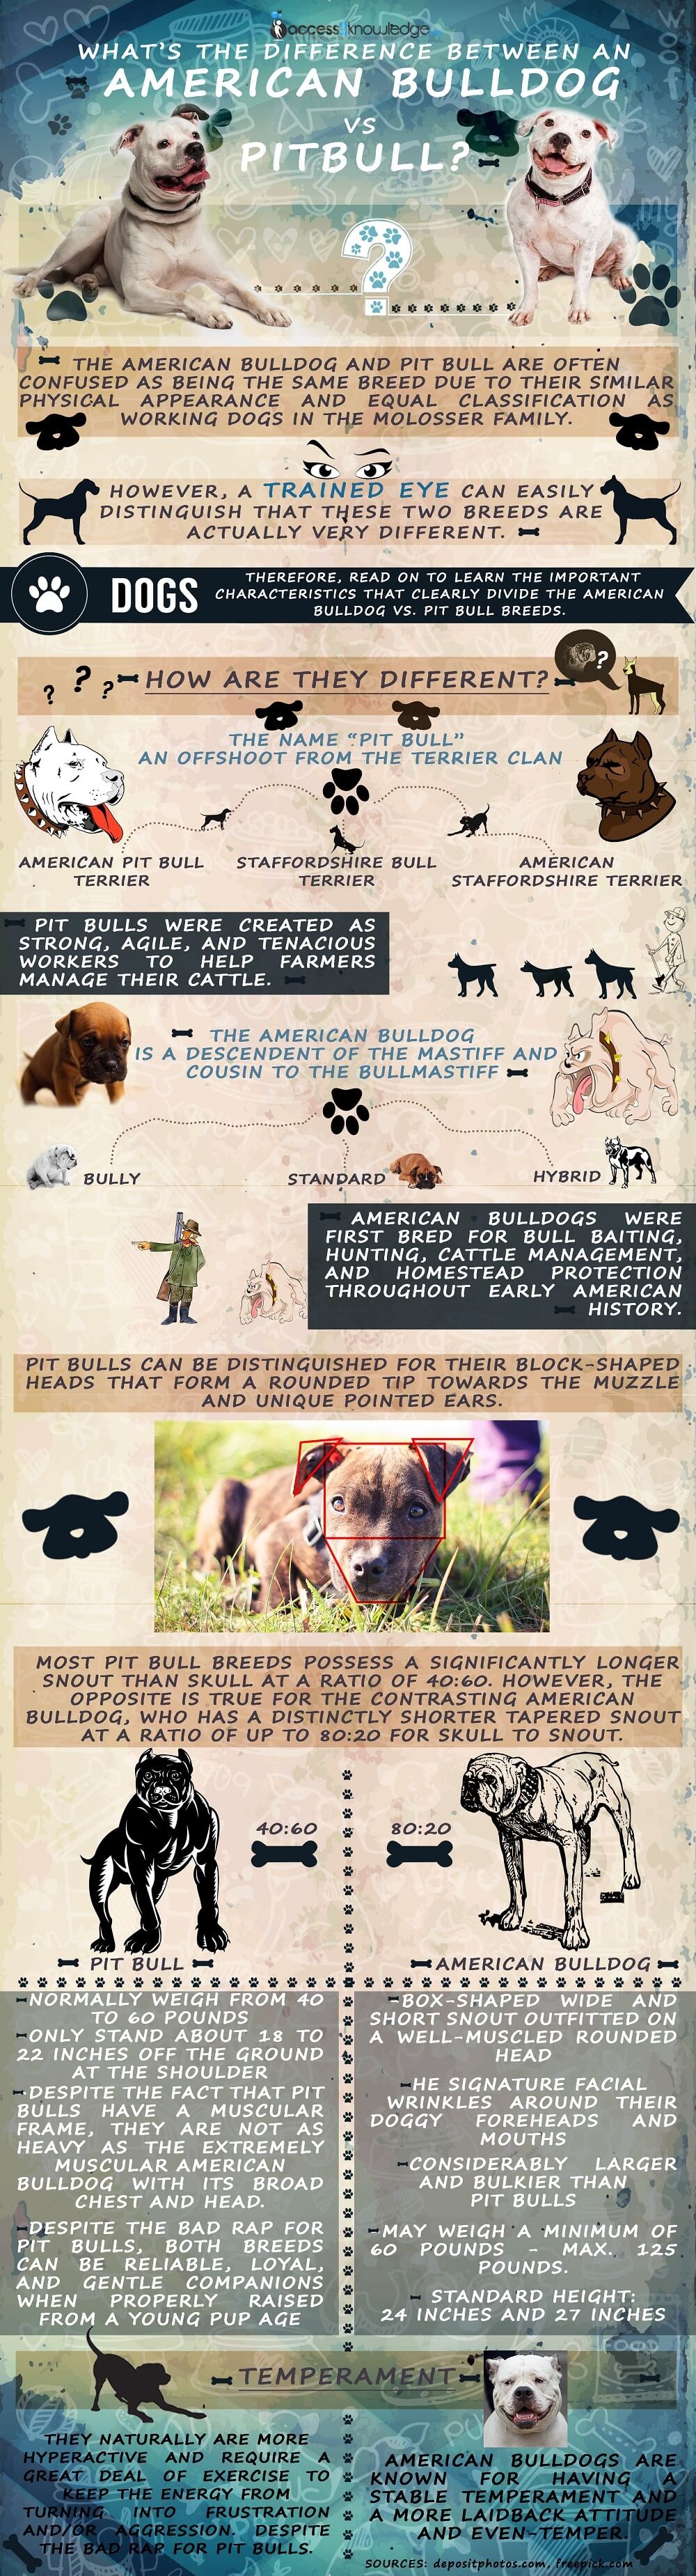 differences between american bulldog and pitbull